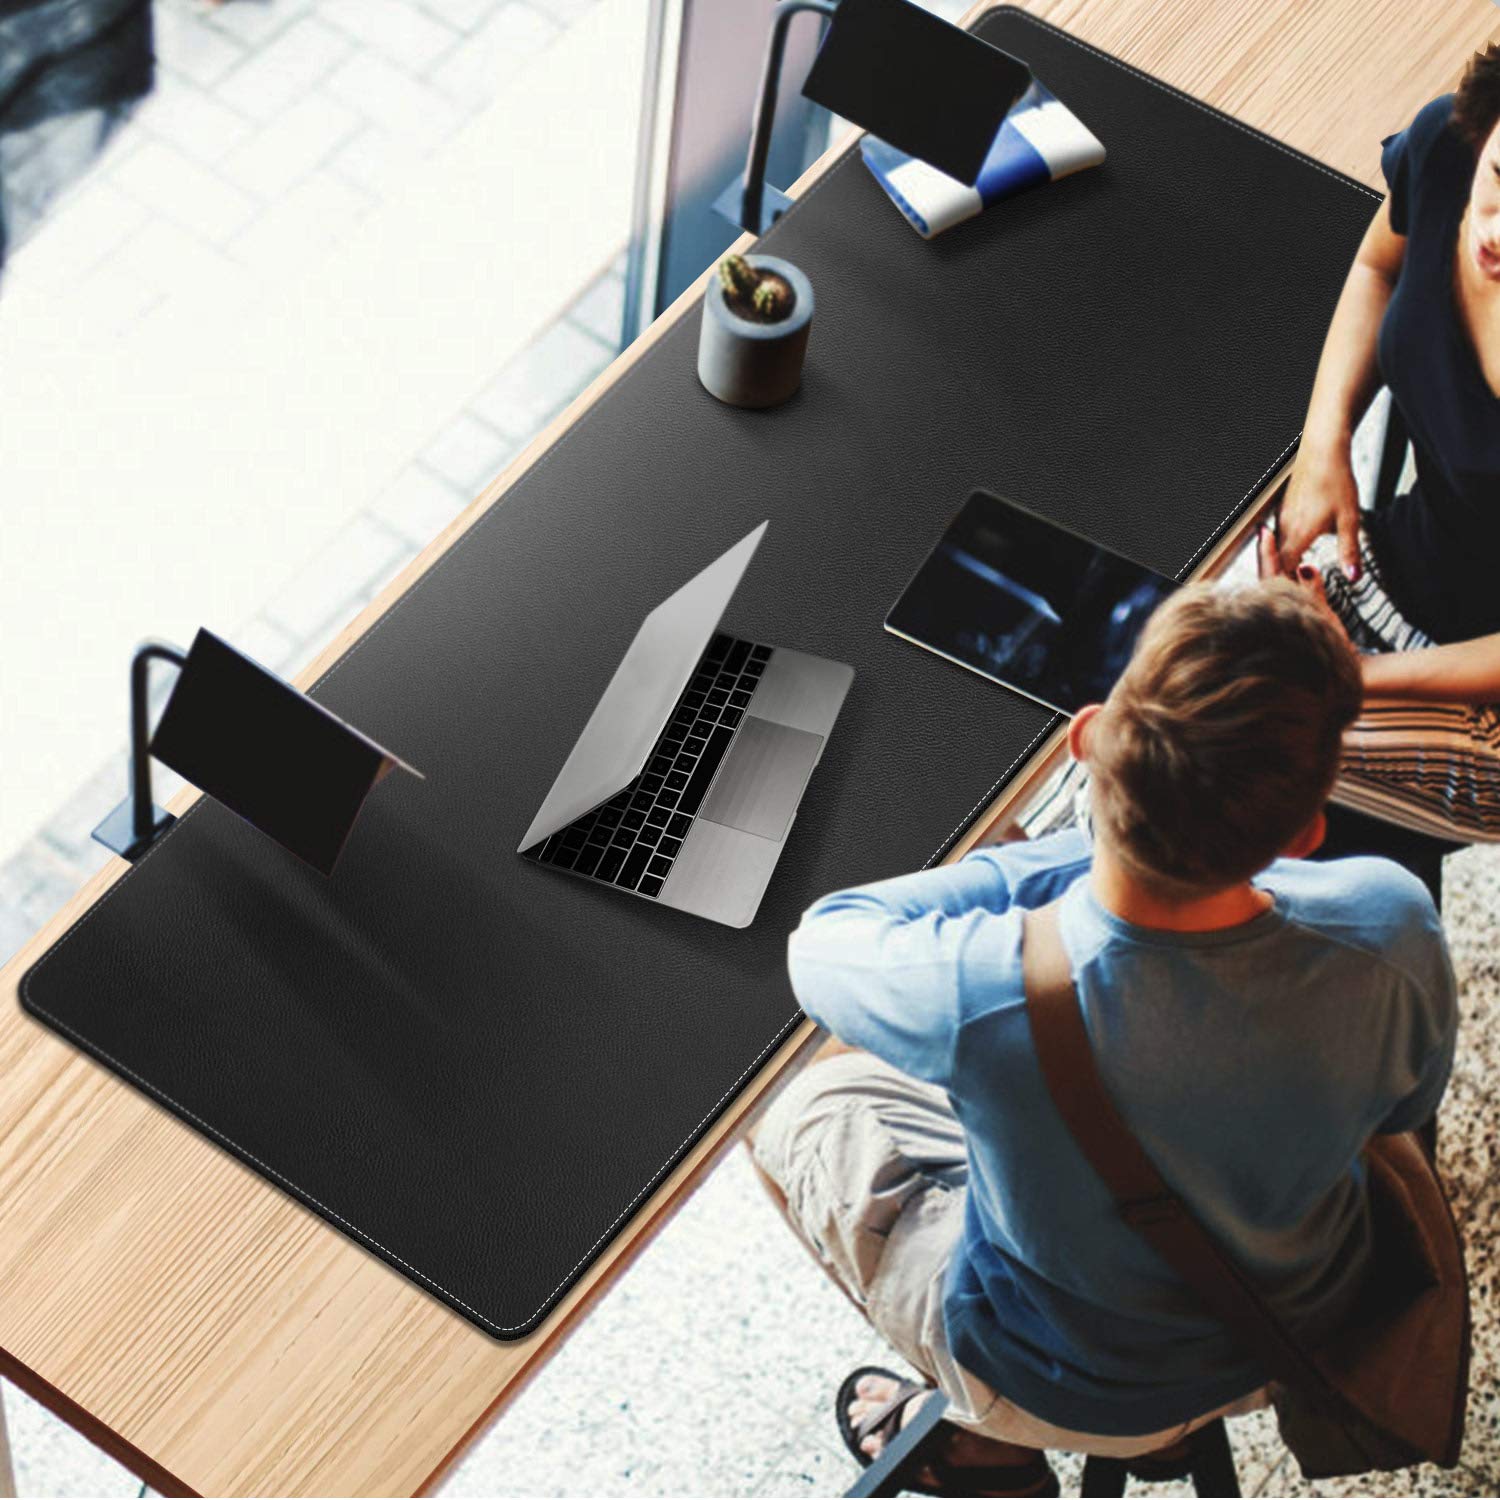 CENNBIE 59" x 27.5" Extended Mega Size Professional Leather Desk Mat for Full Desk - Super Large XXXL Large Mouse Pad (Black)